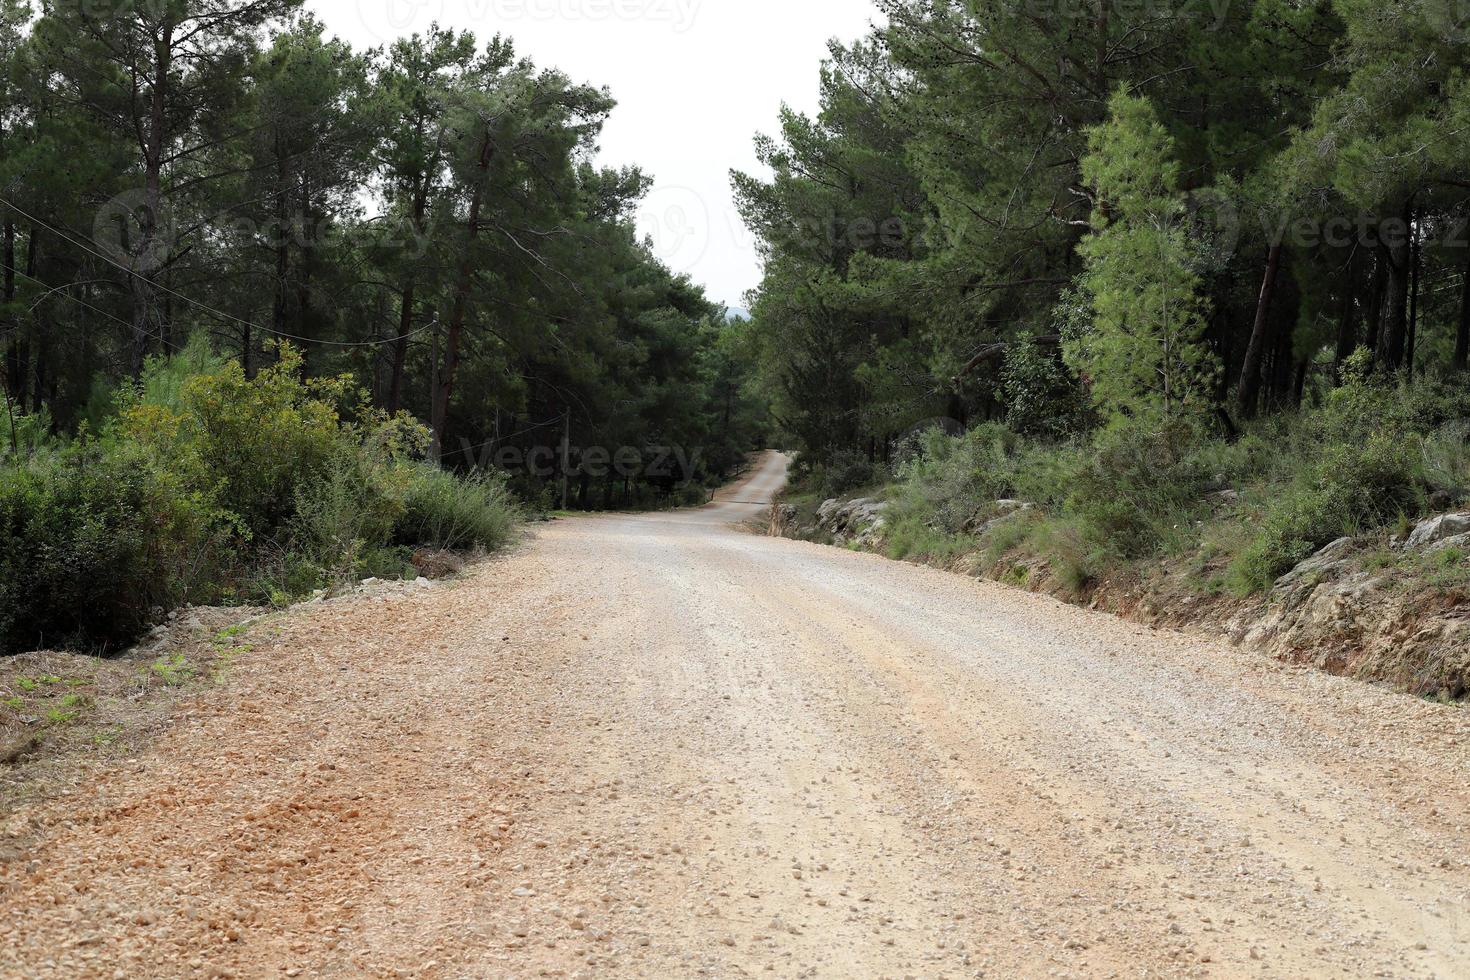 estrada rural da floresta no norte de israel. foto